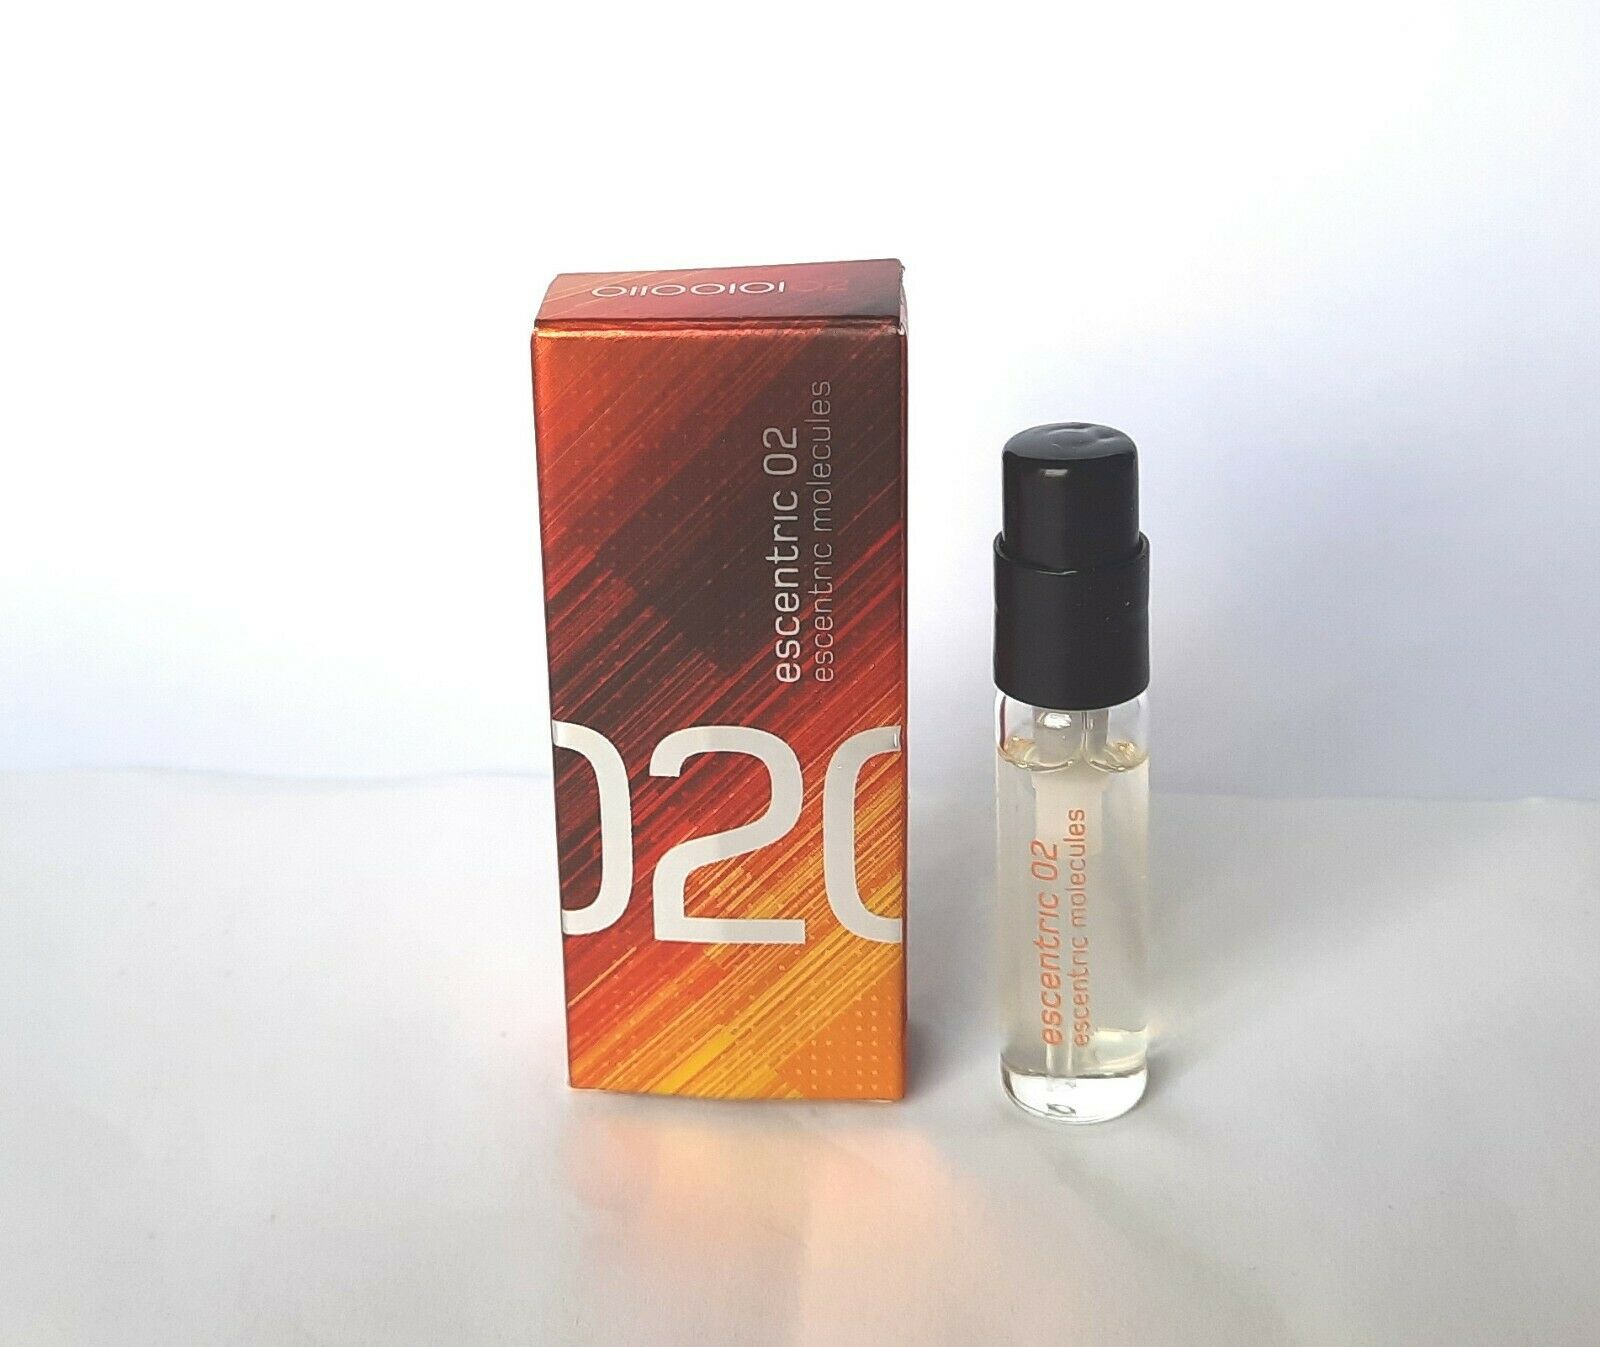 Escentric Molecules Escentric 02 oficjalna próbka perfum 2ml 0.06 fl. oz